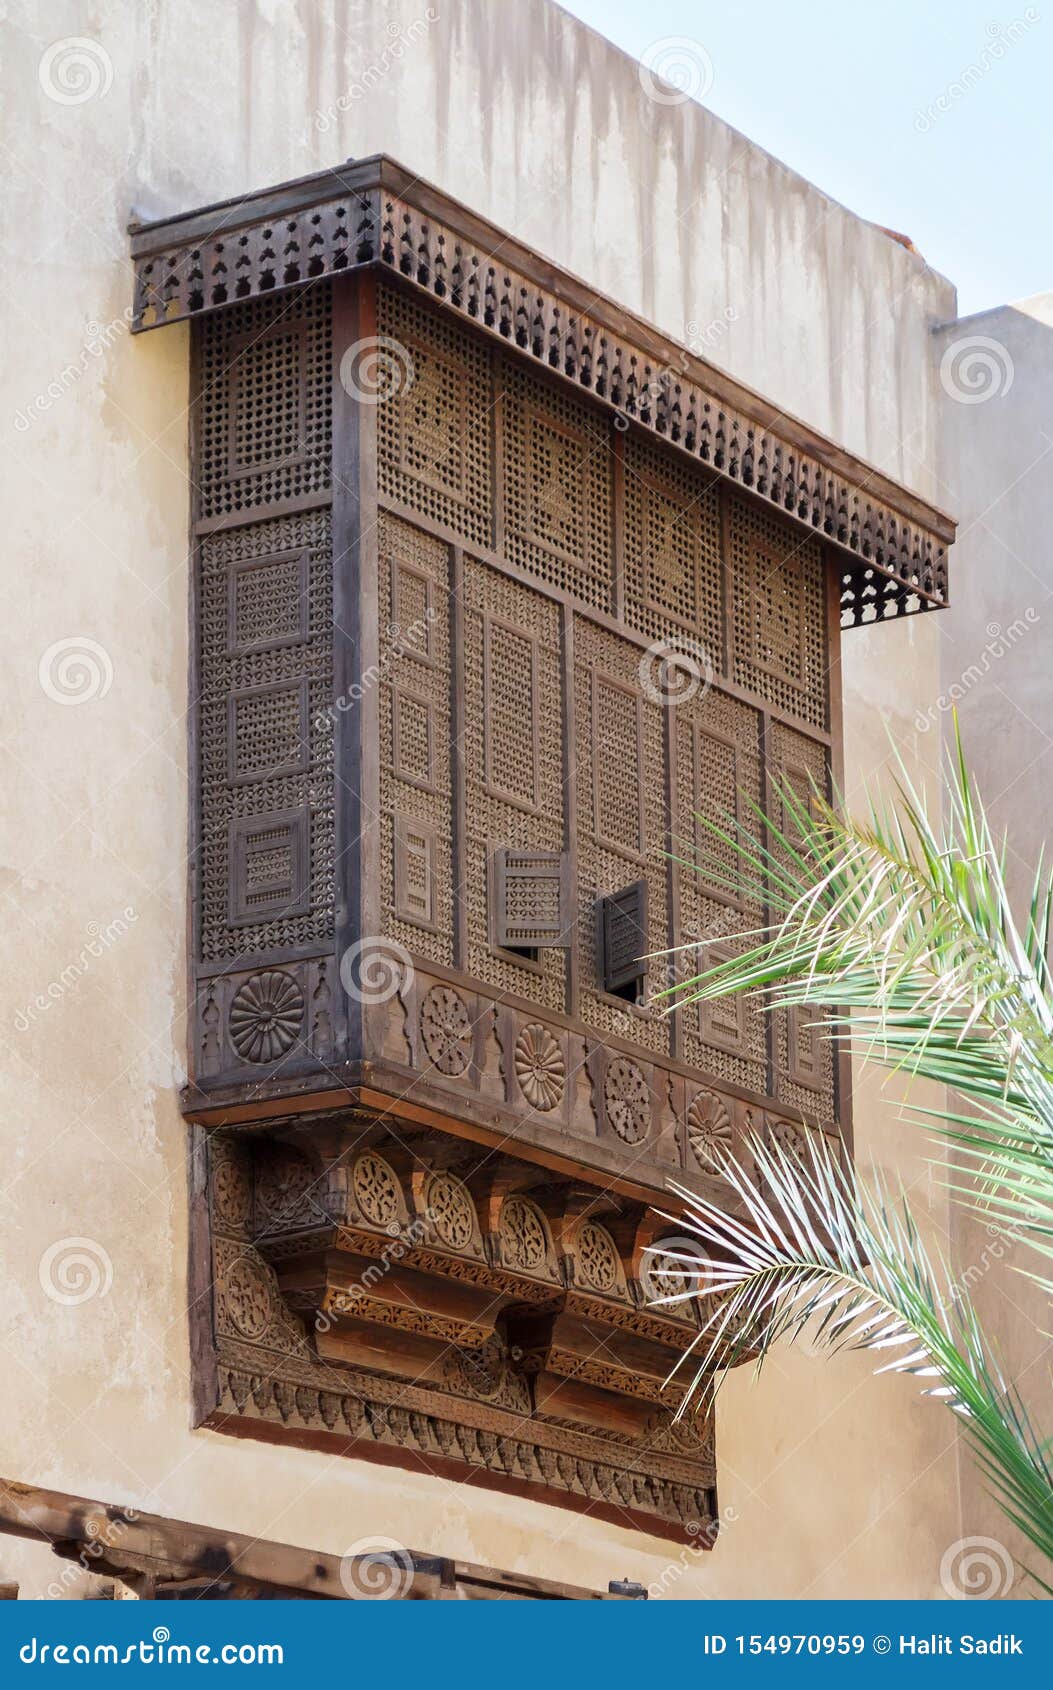 mamluk era style oriel window covered by interleaved wooden grid - mashrabiya - on stone wall, cairo, egypt